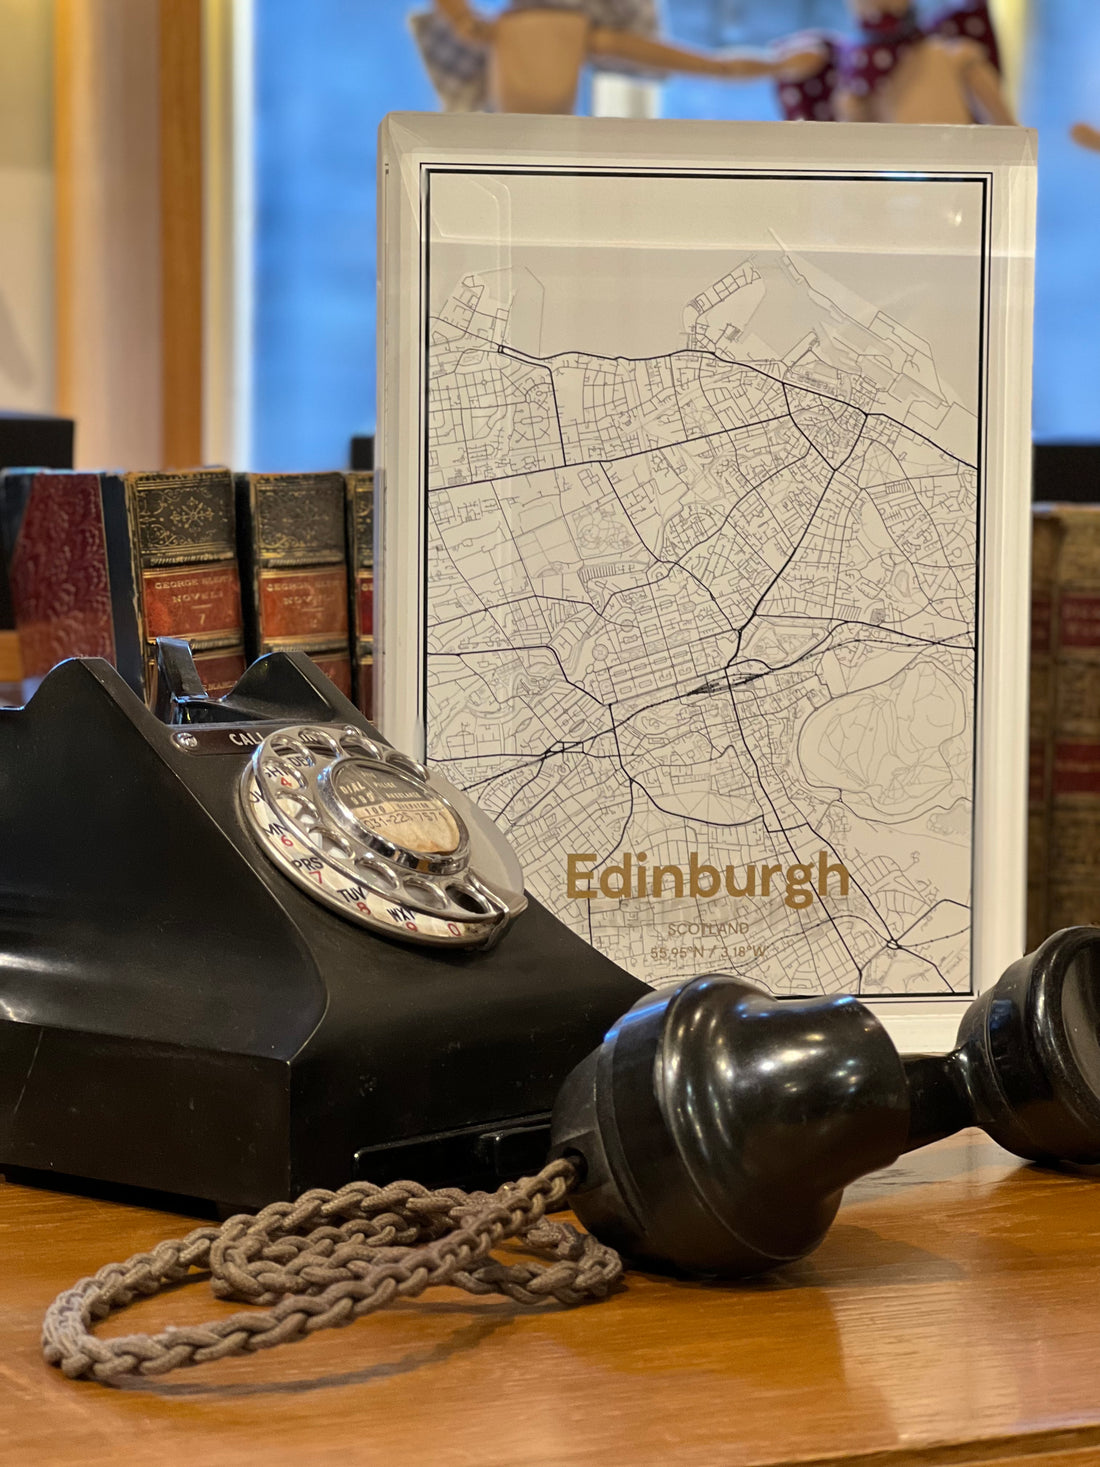 Edinburgh Map|design object